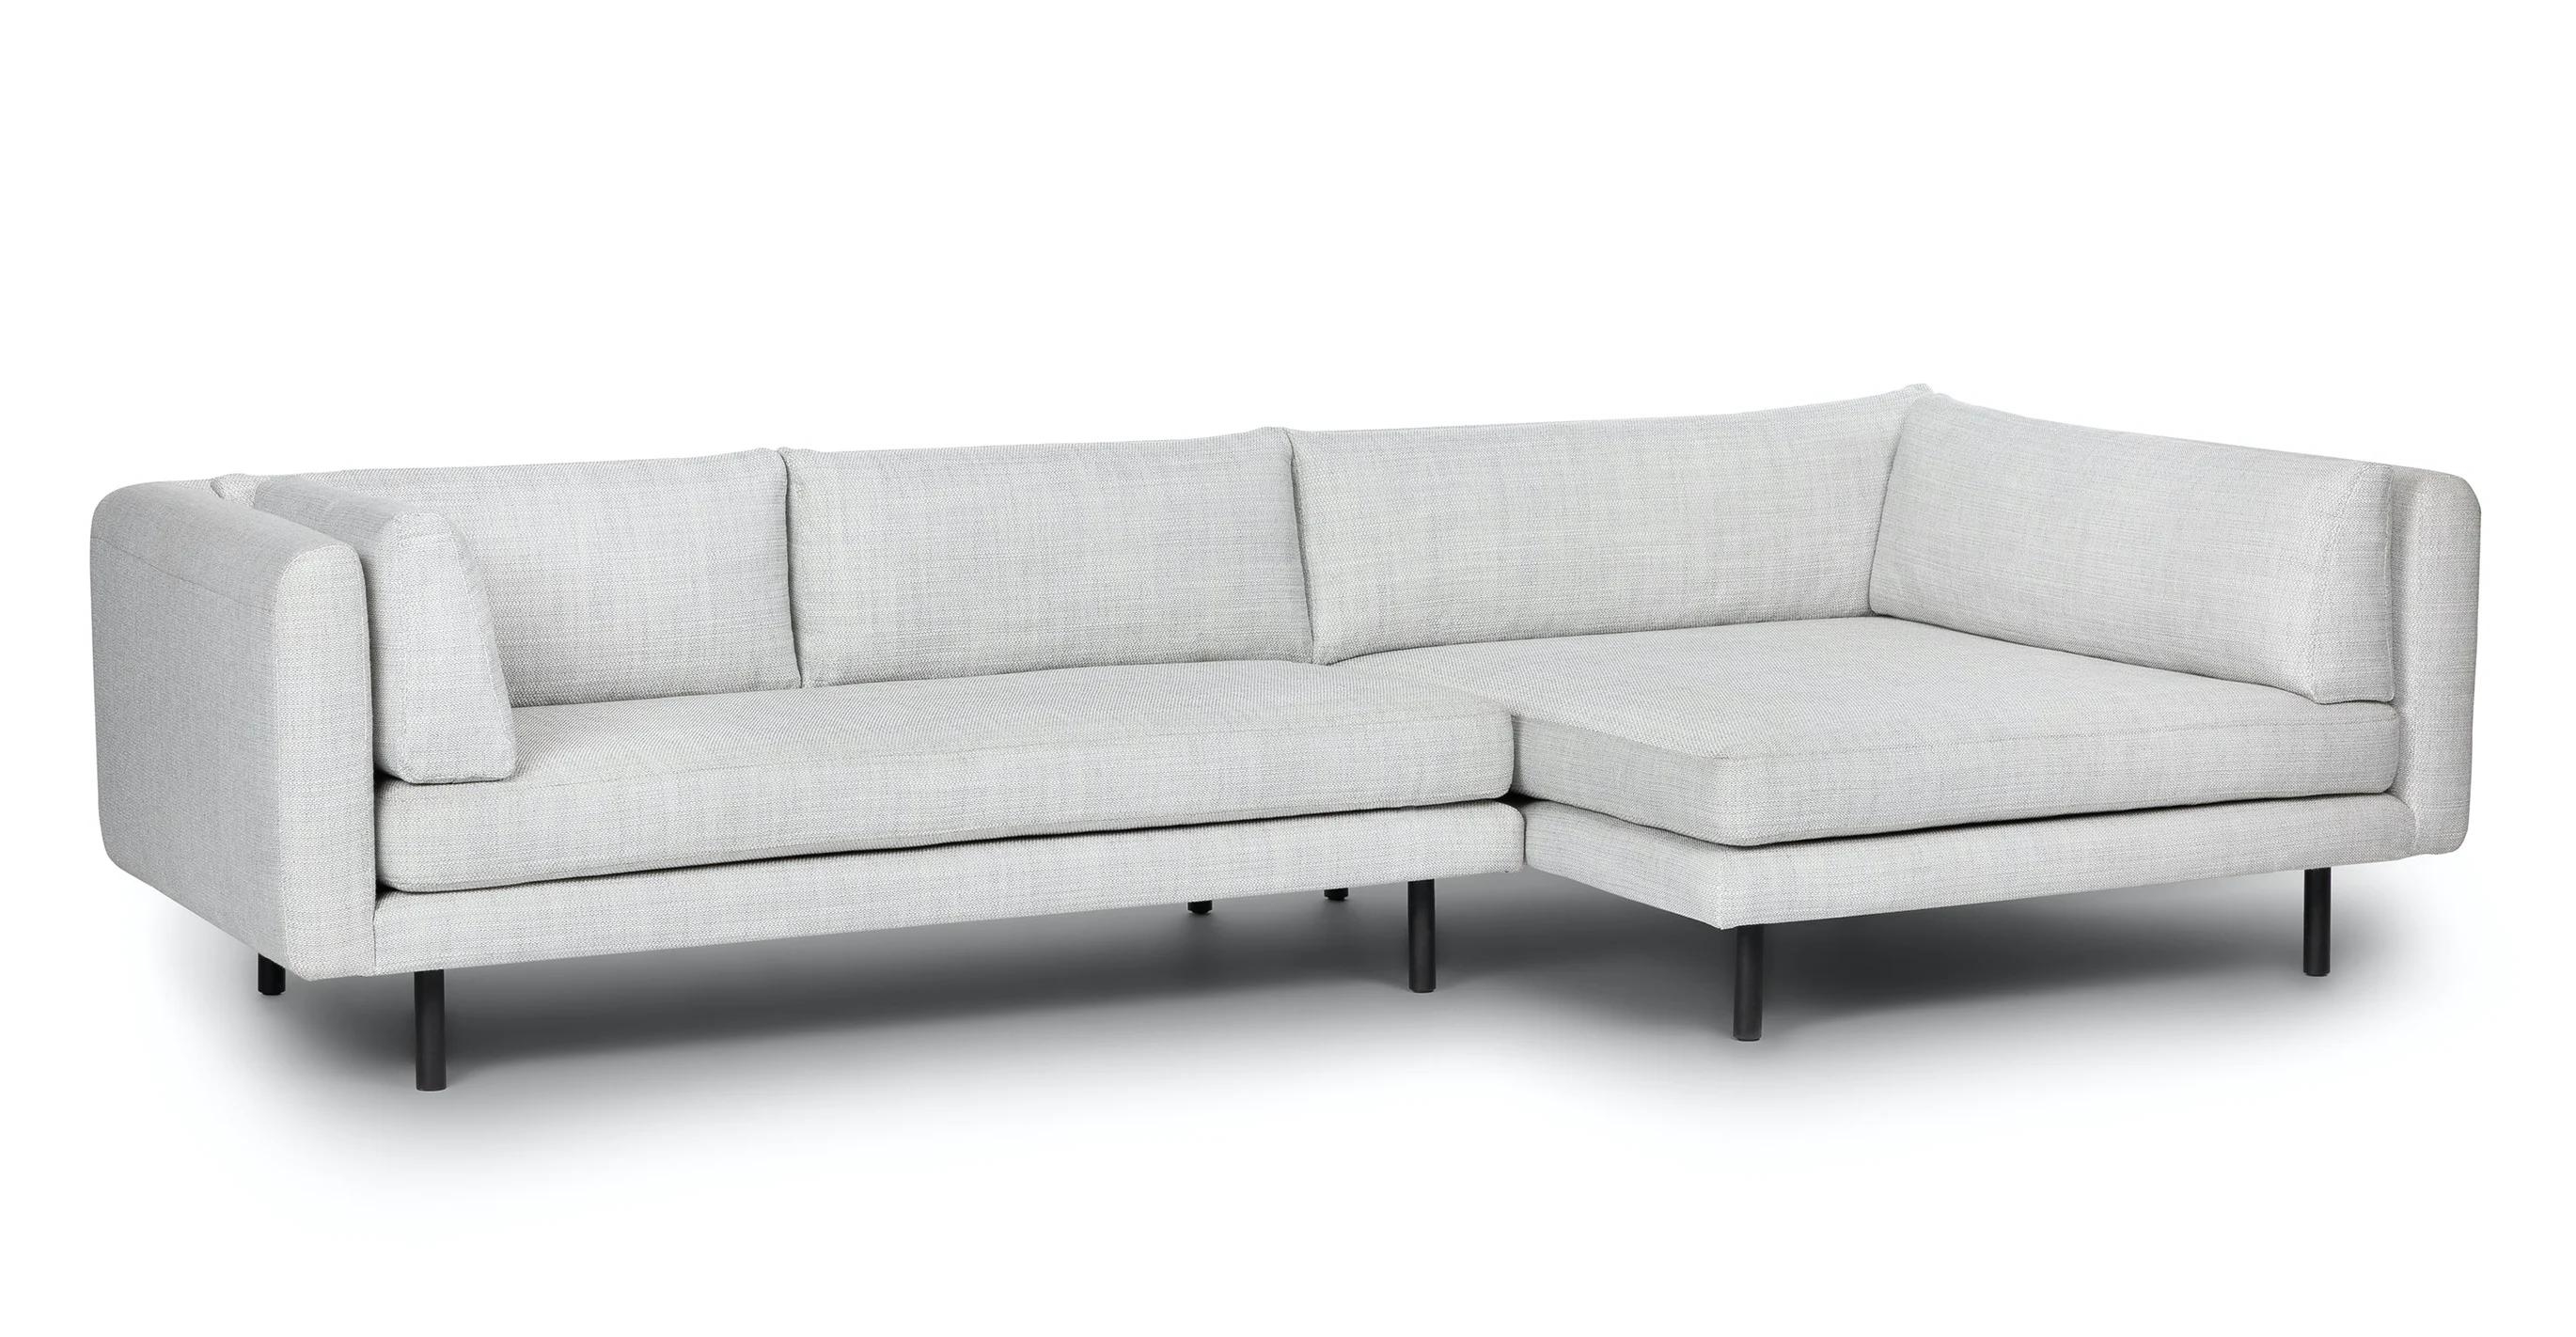 Lappi Right Sectional Sofa, Serene Gray - Image 2